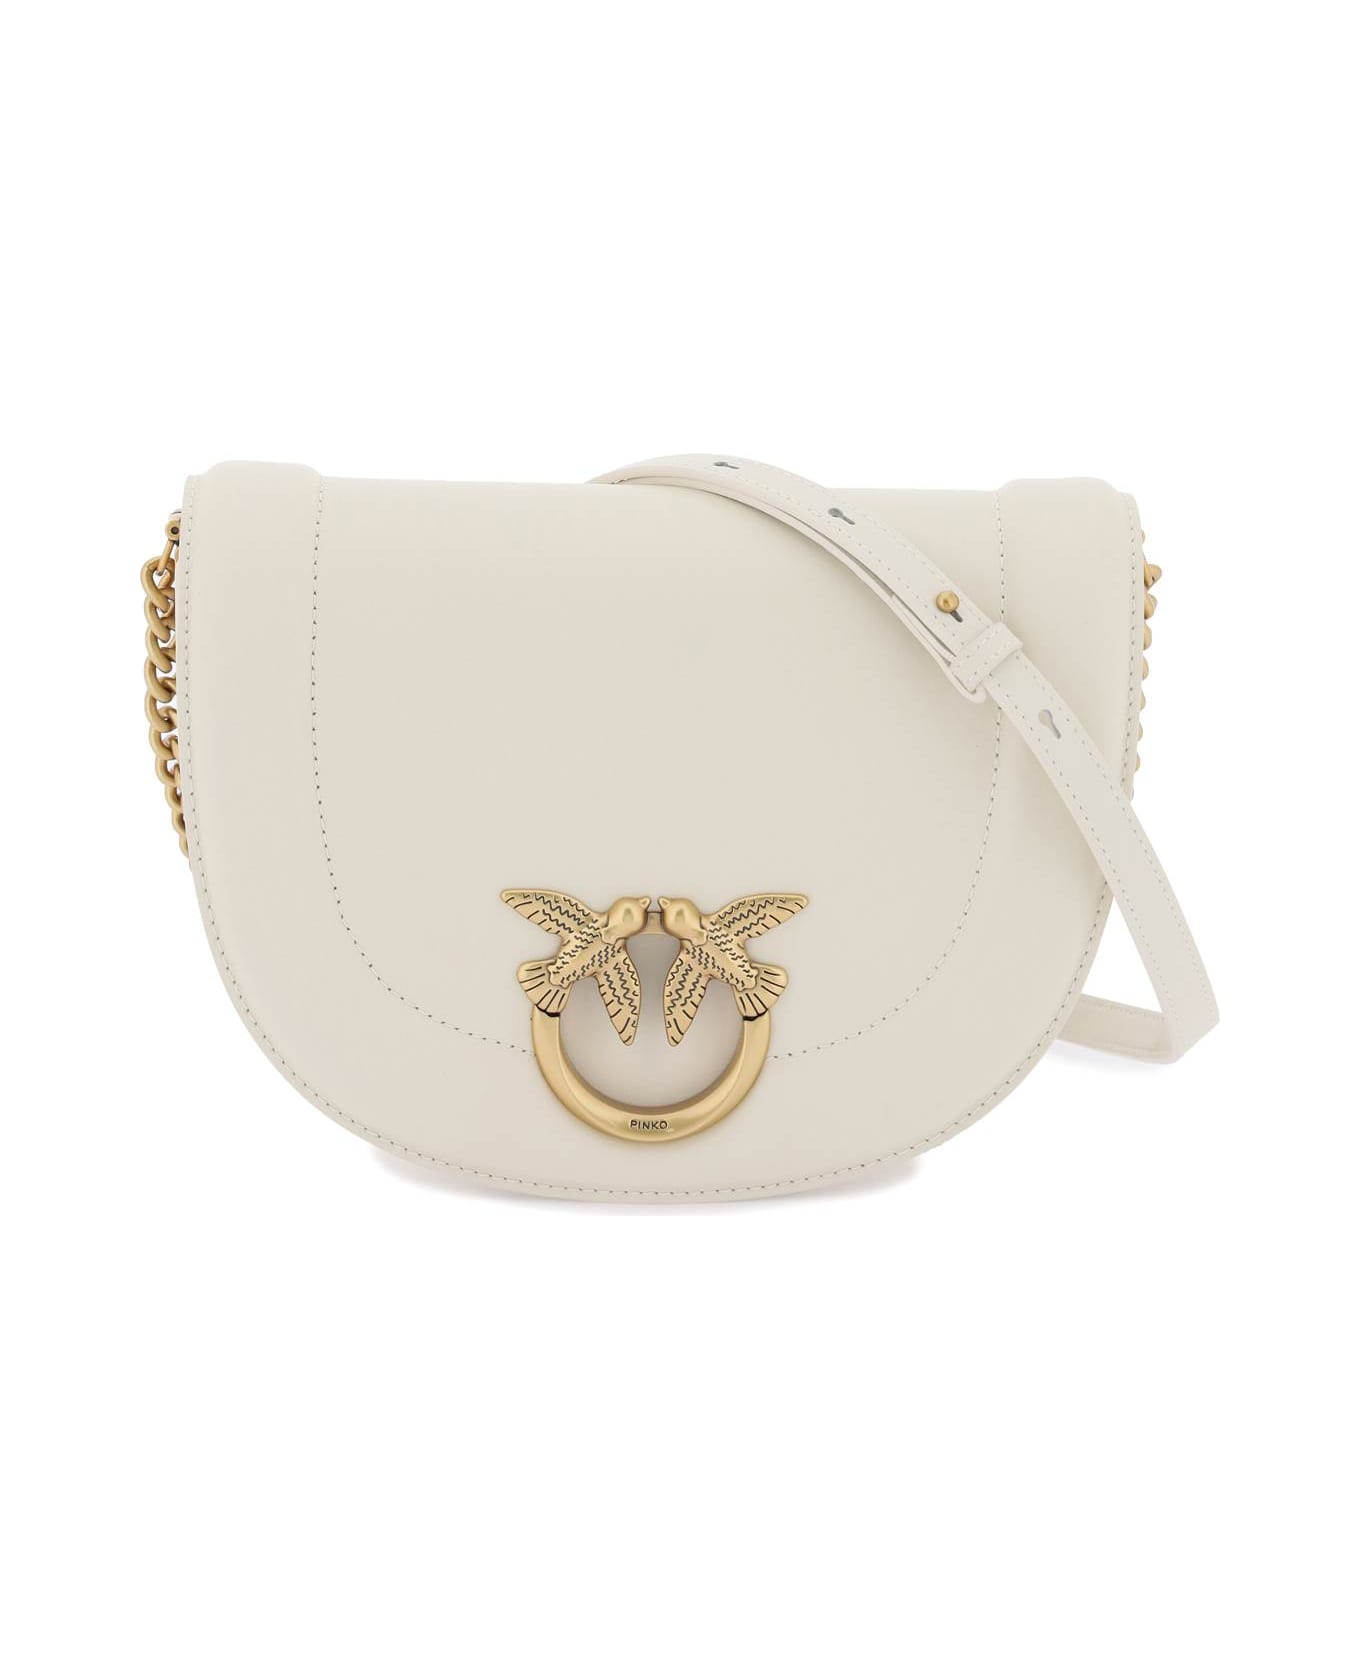 Pinko Love Bag Click Round Leather Bag - BIANCO SETA ANTIQUE GOLD (White)